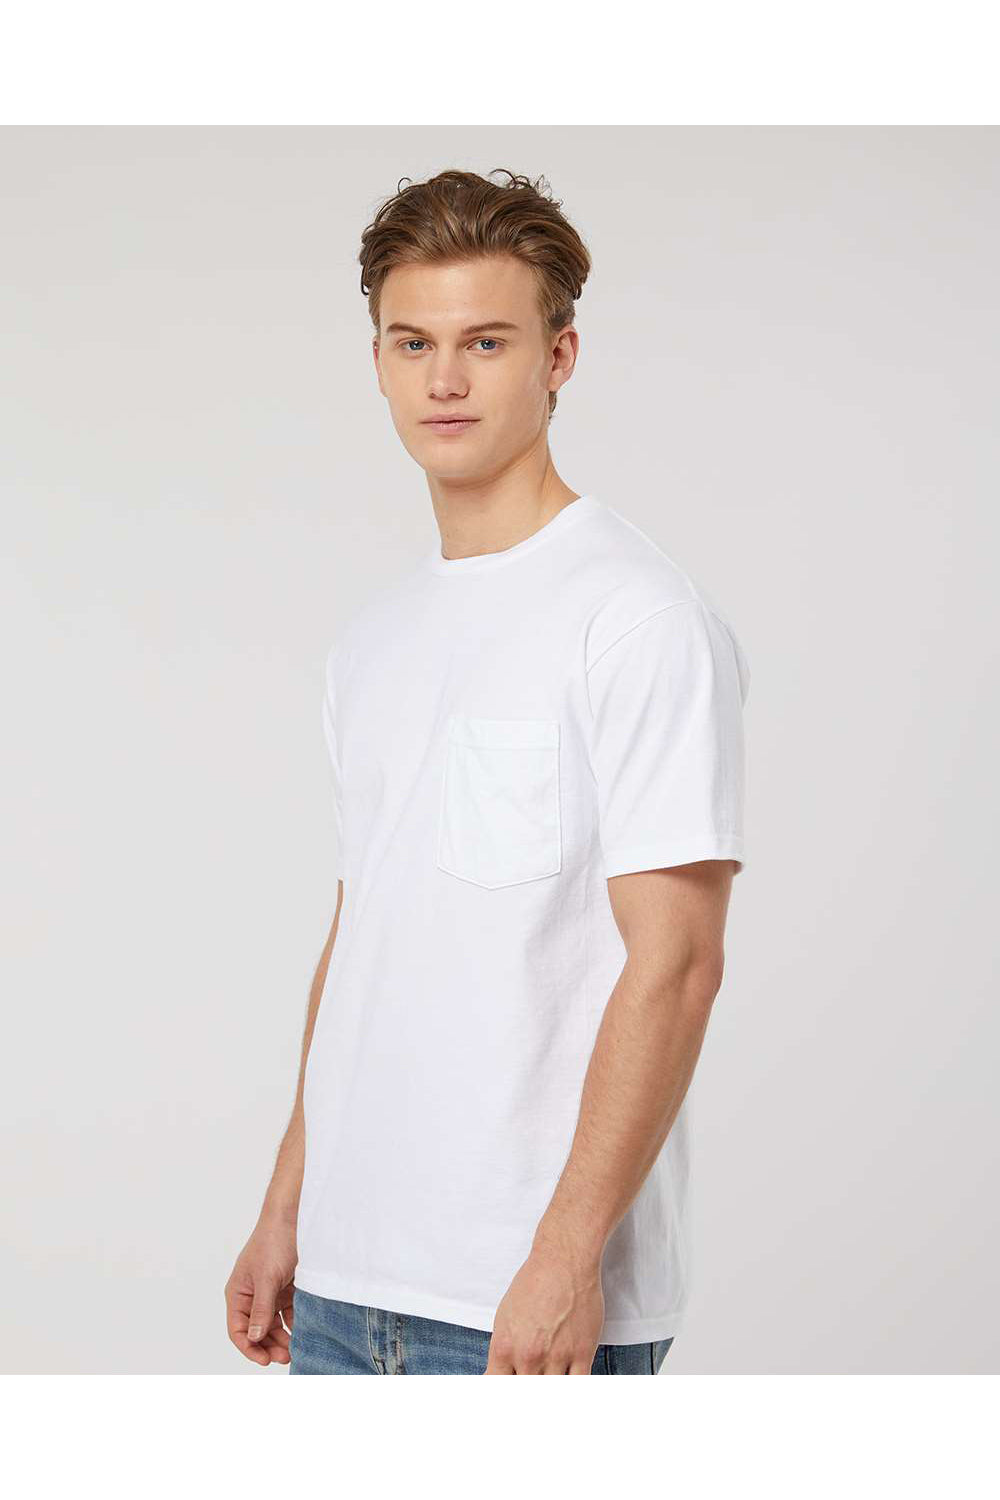 Tultex 293 Mens Jersey Short Sleeve Crewneck T-Shirt w/ Pocket White Model Side